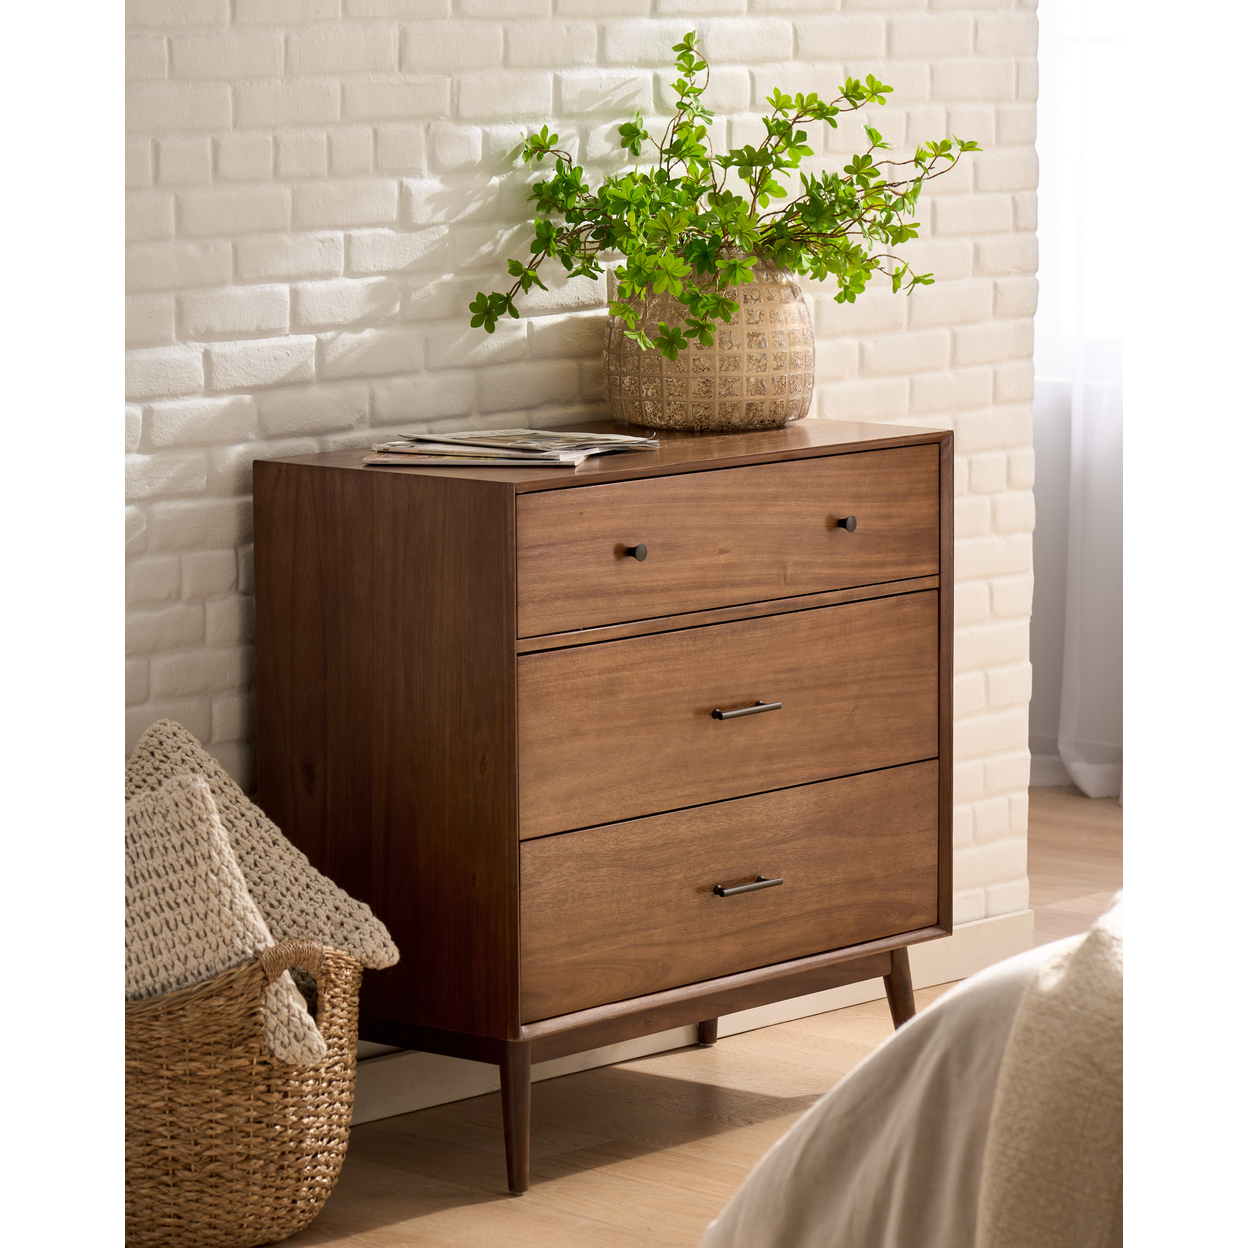 OkiOKi Mid-Century Three Drawer Dresser - Medium Brown